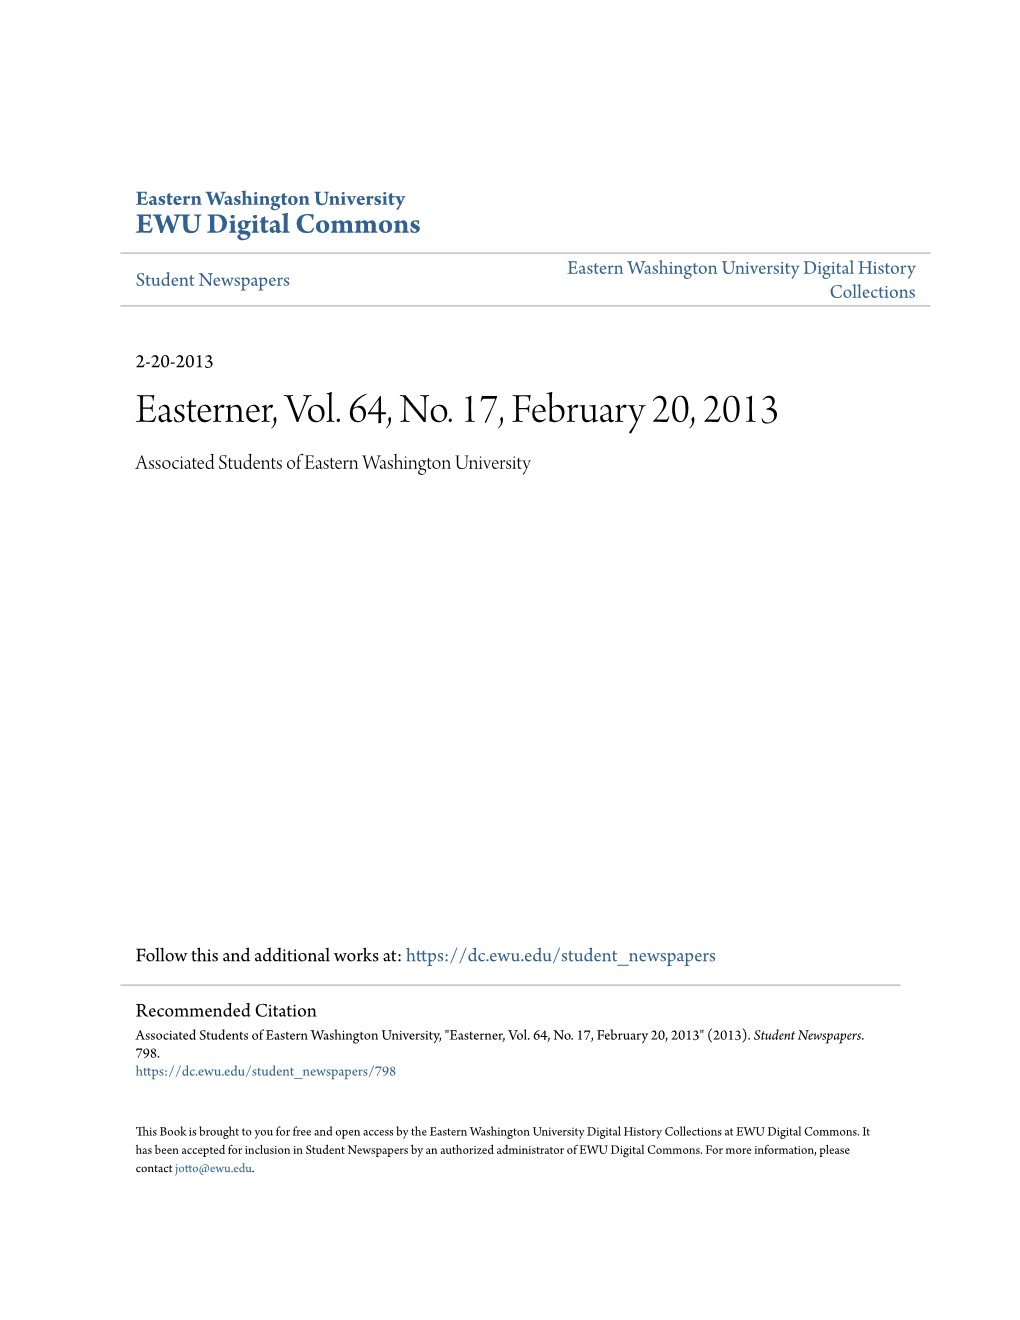 Easterner, Vol. 64, No. 17, February 20, 2013 Associated Students of Eastern Washington University